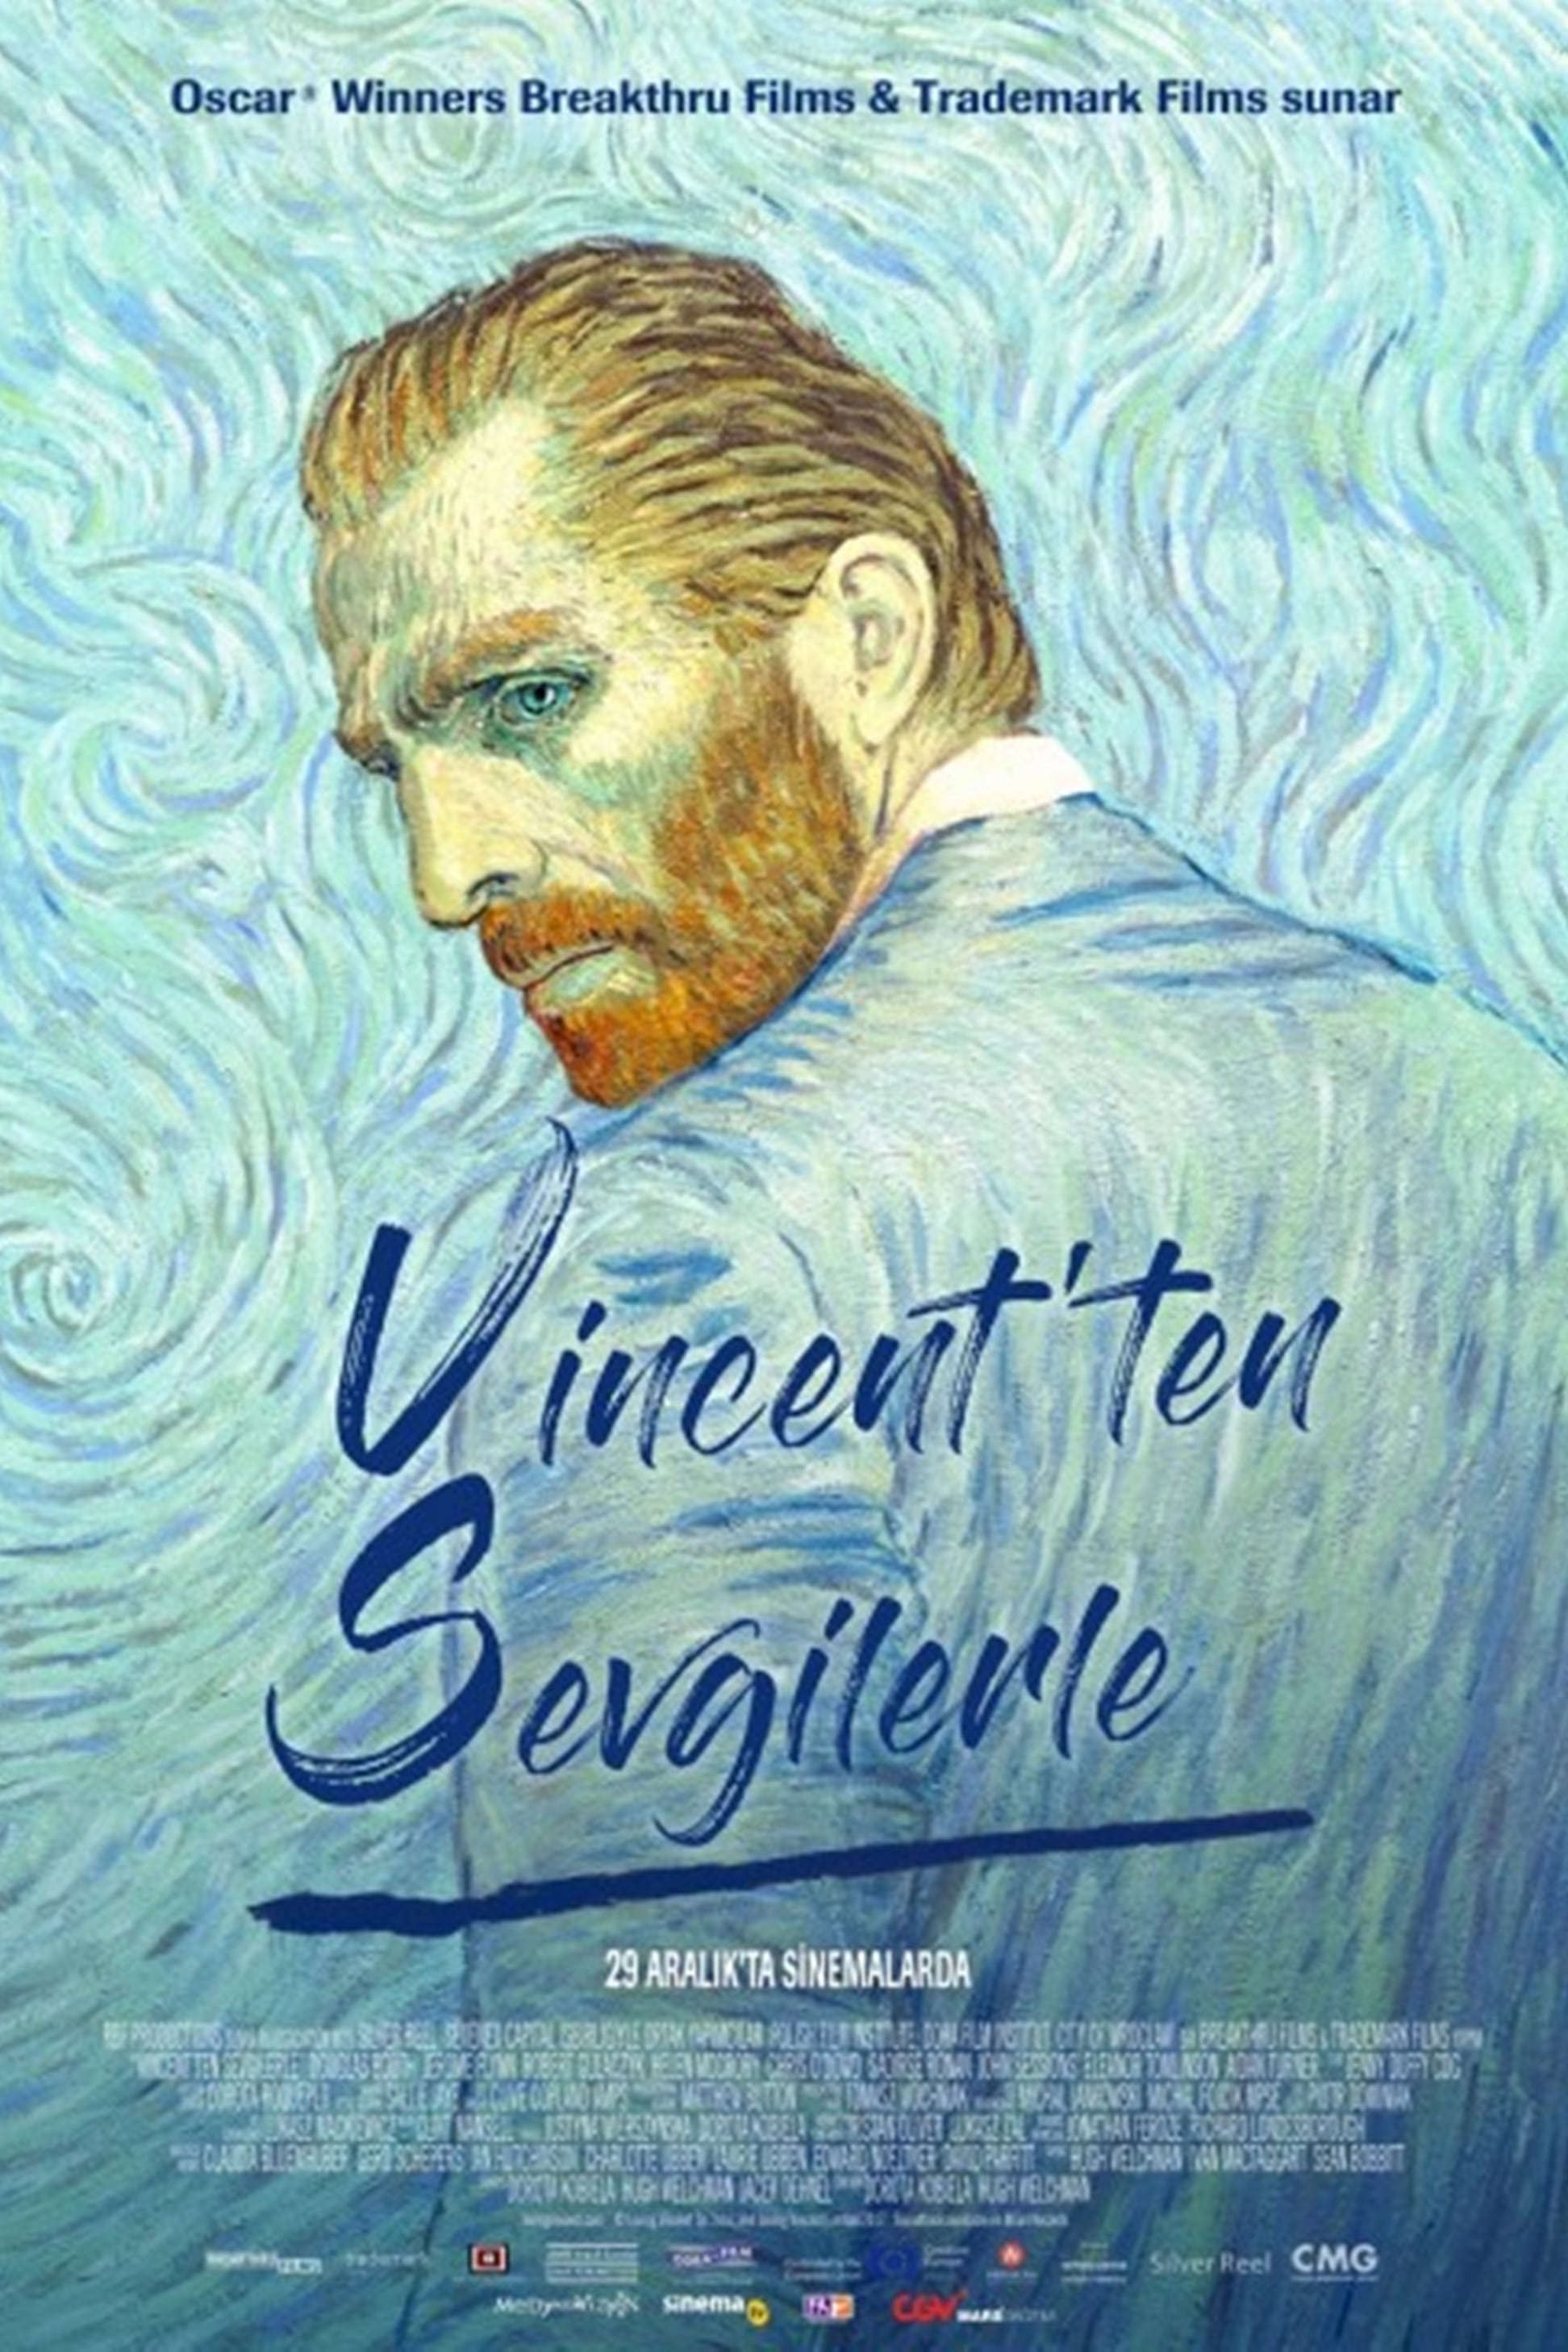 Vincent'ten Sevgilerle- Loving Vincent